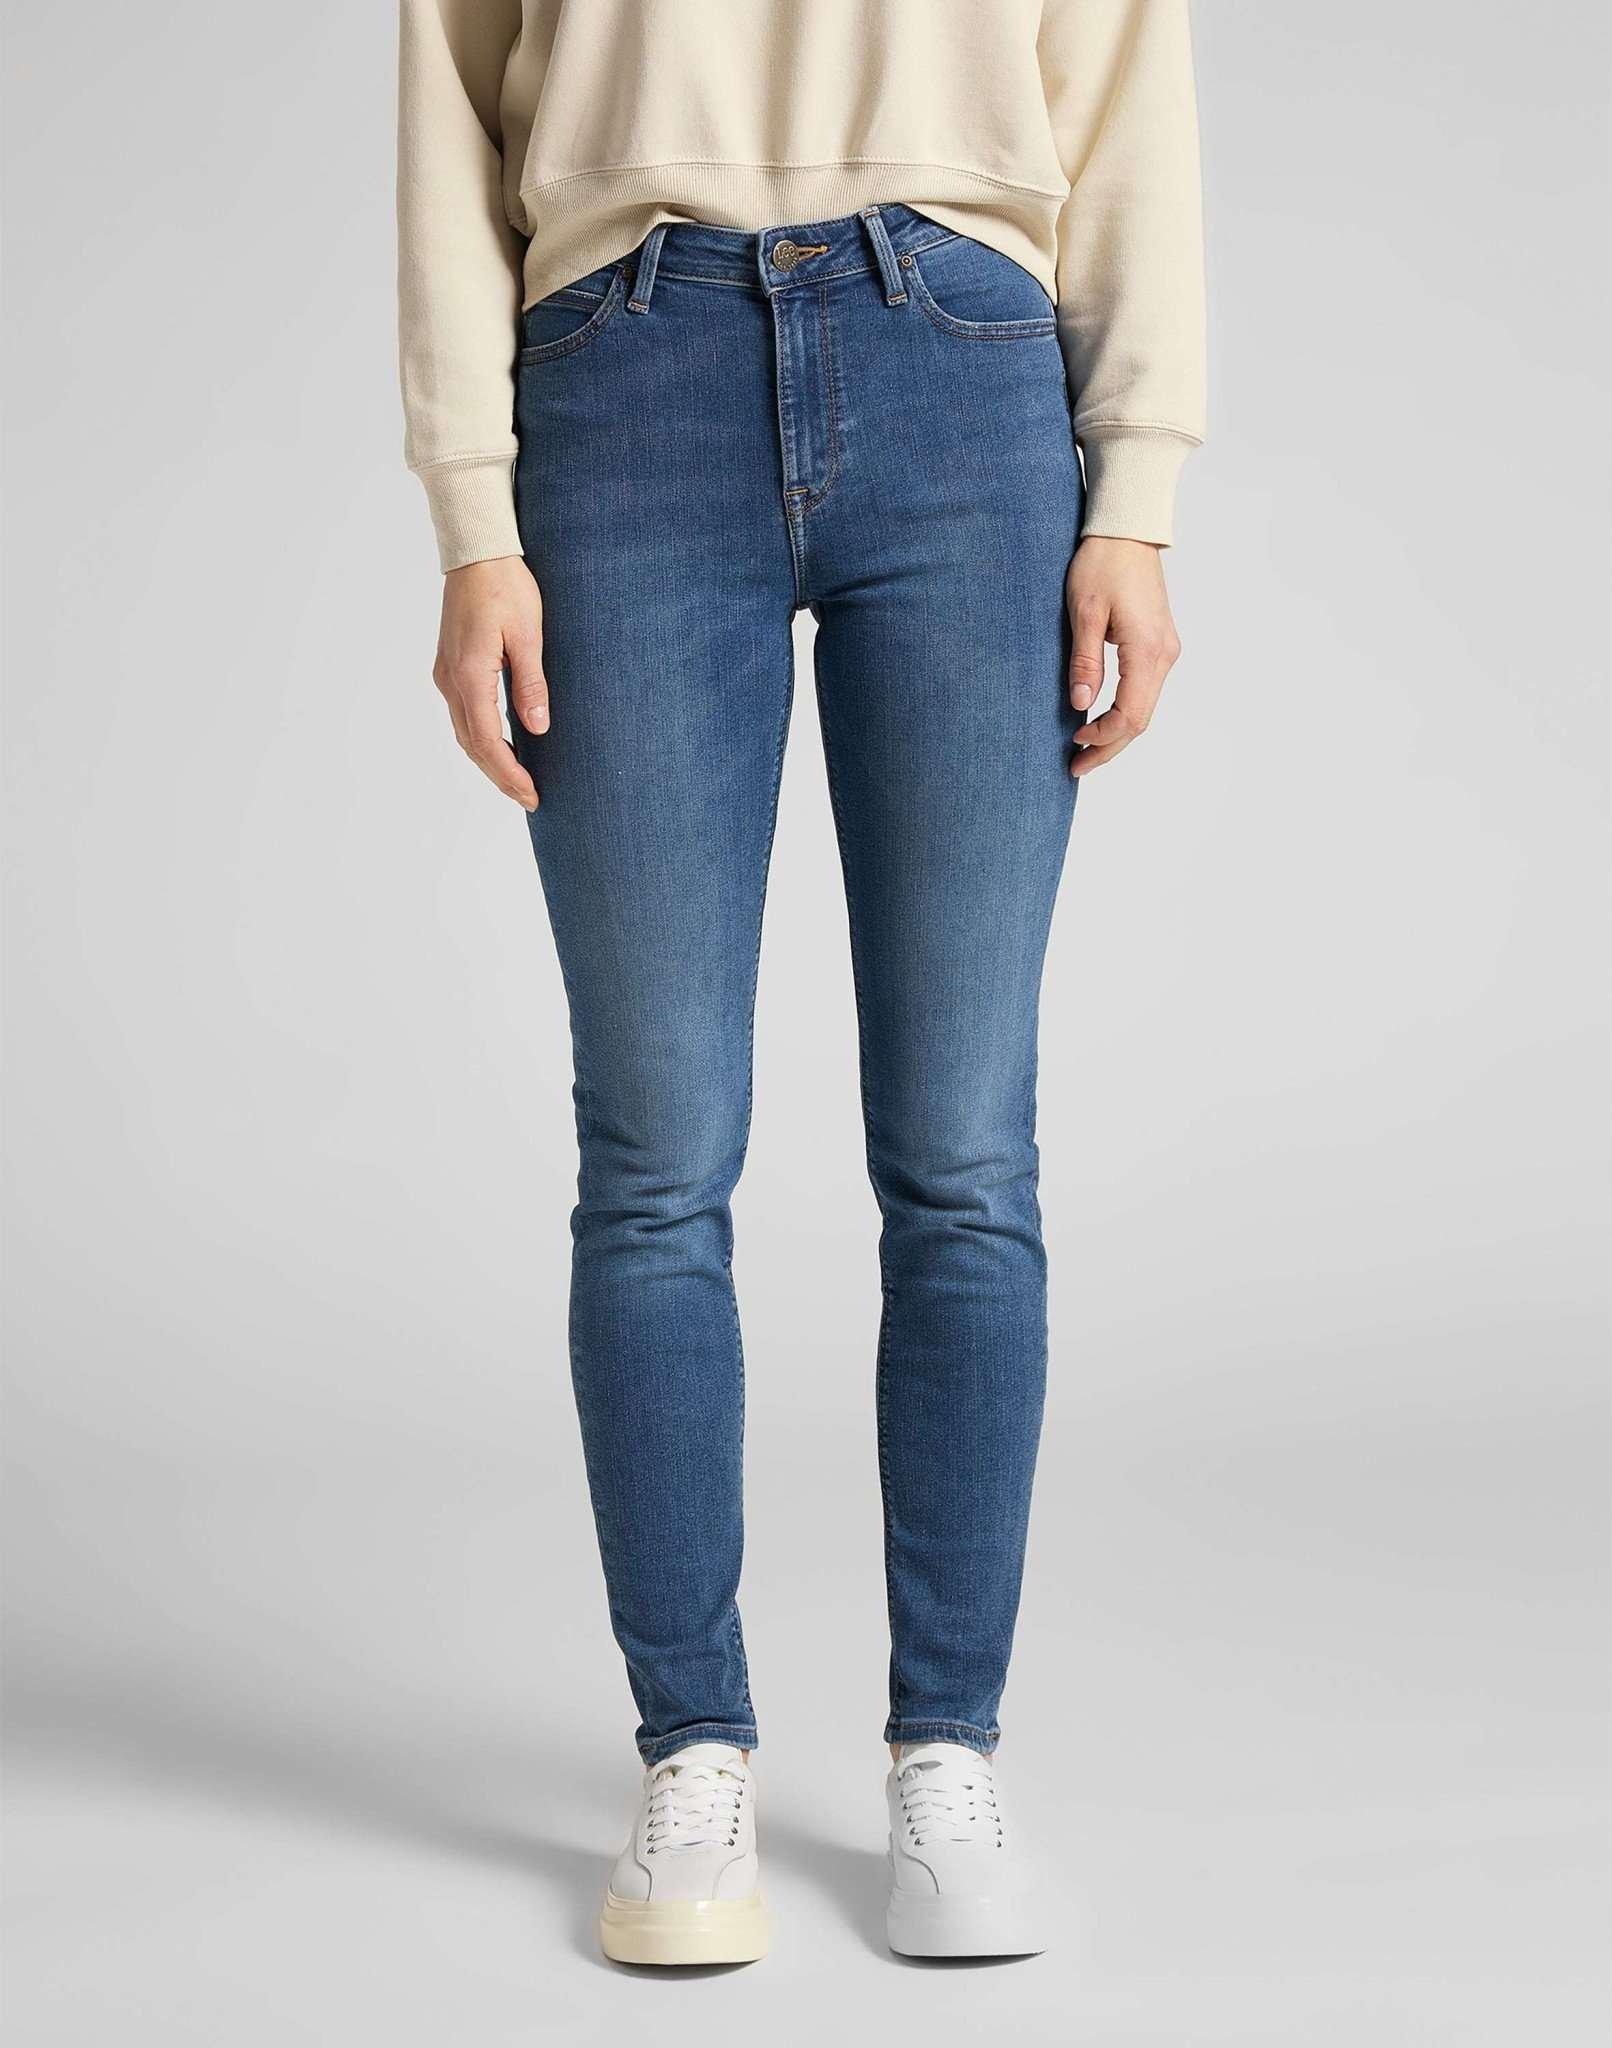 Jeans Skinny Fit Scarlett High Damen Blau Denim L31/W32 von Lee